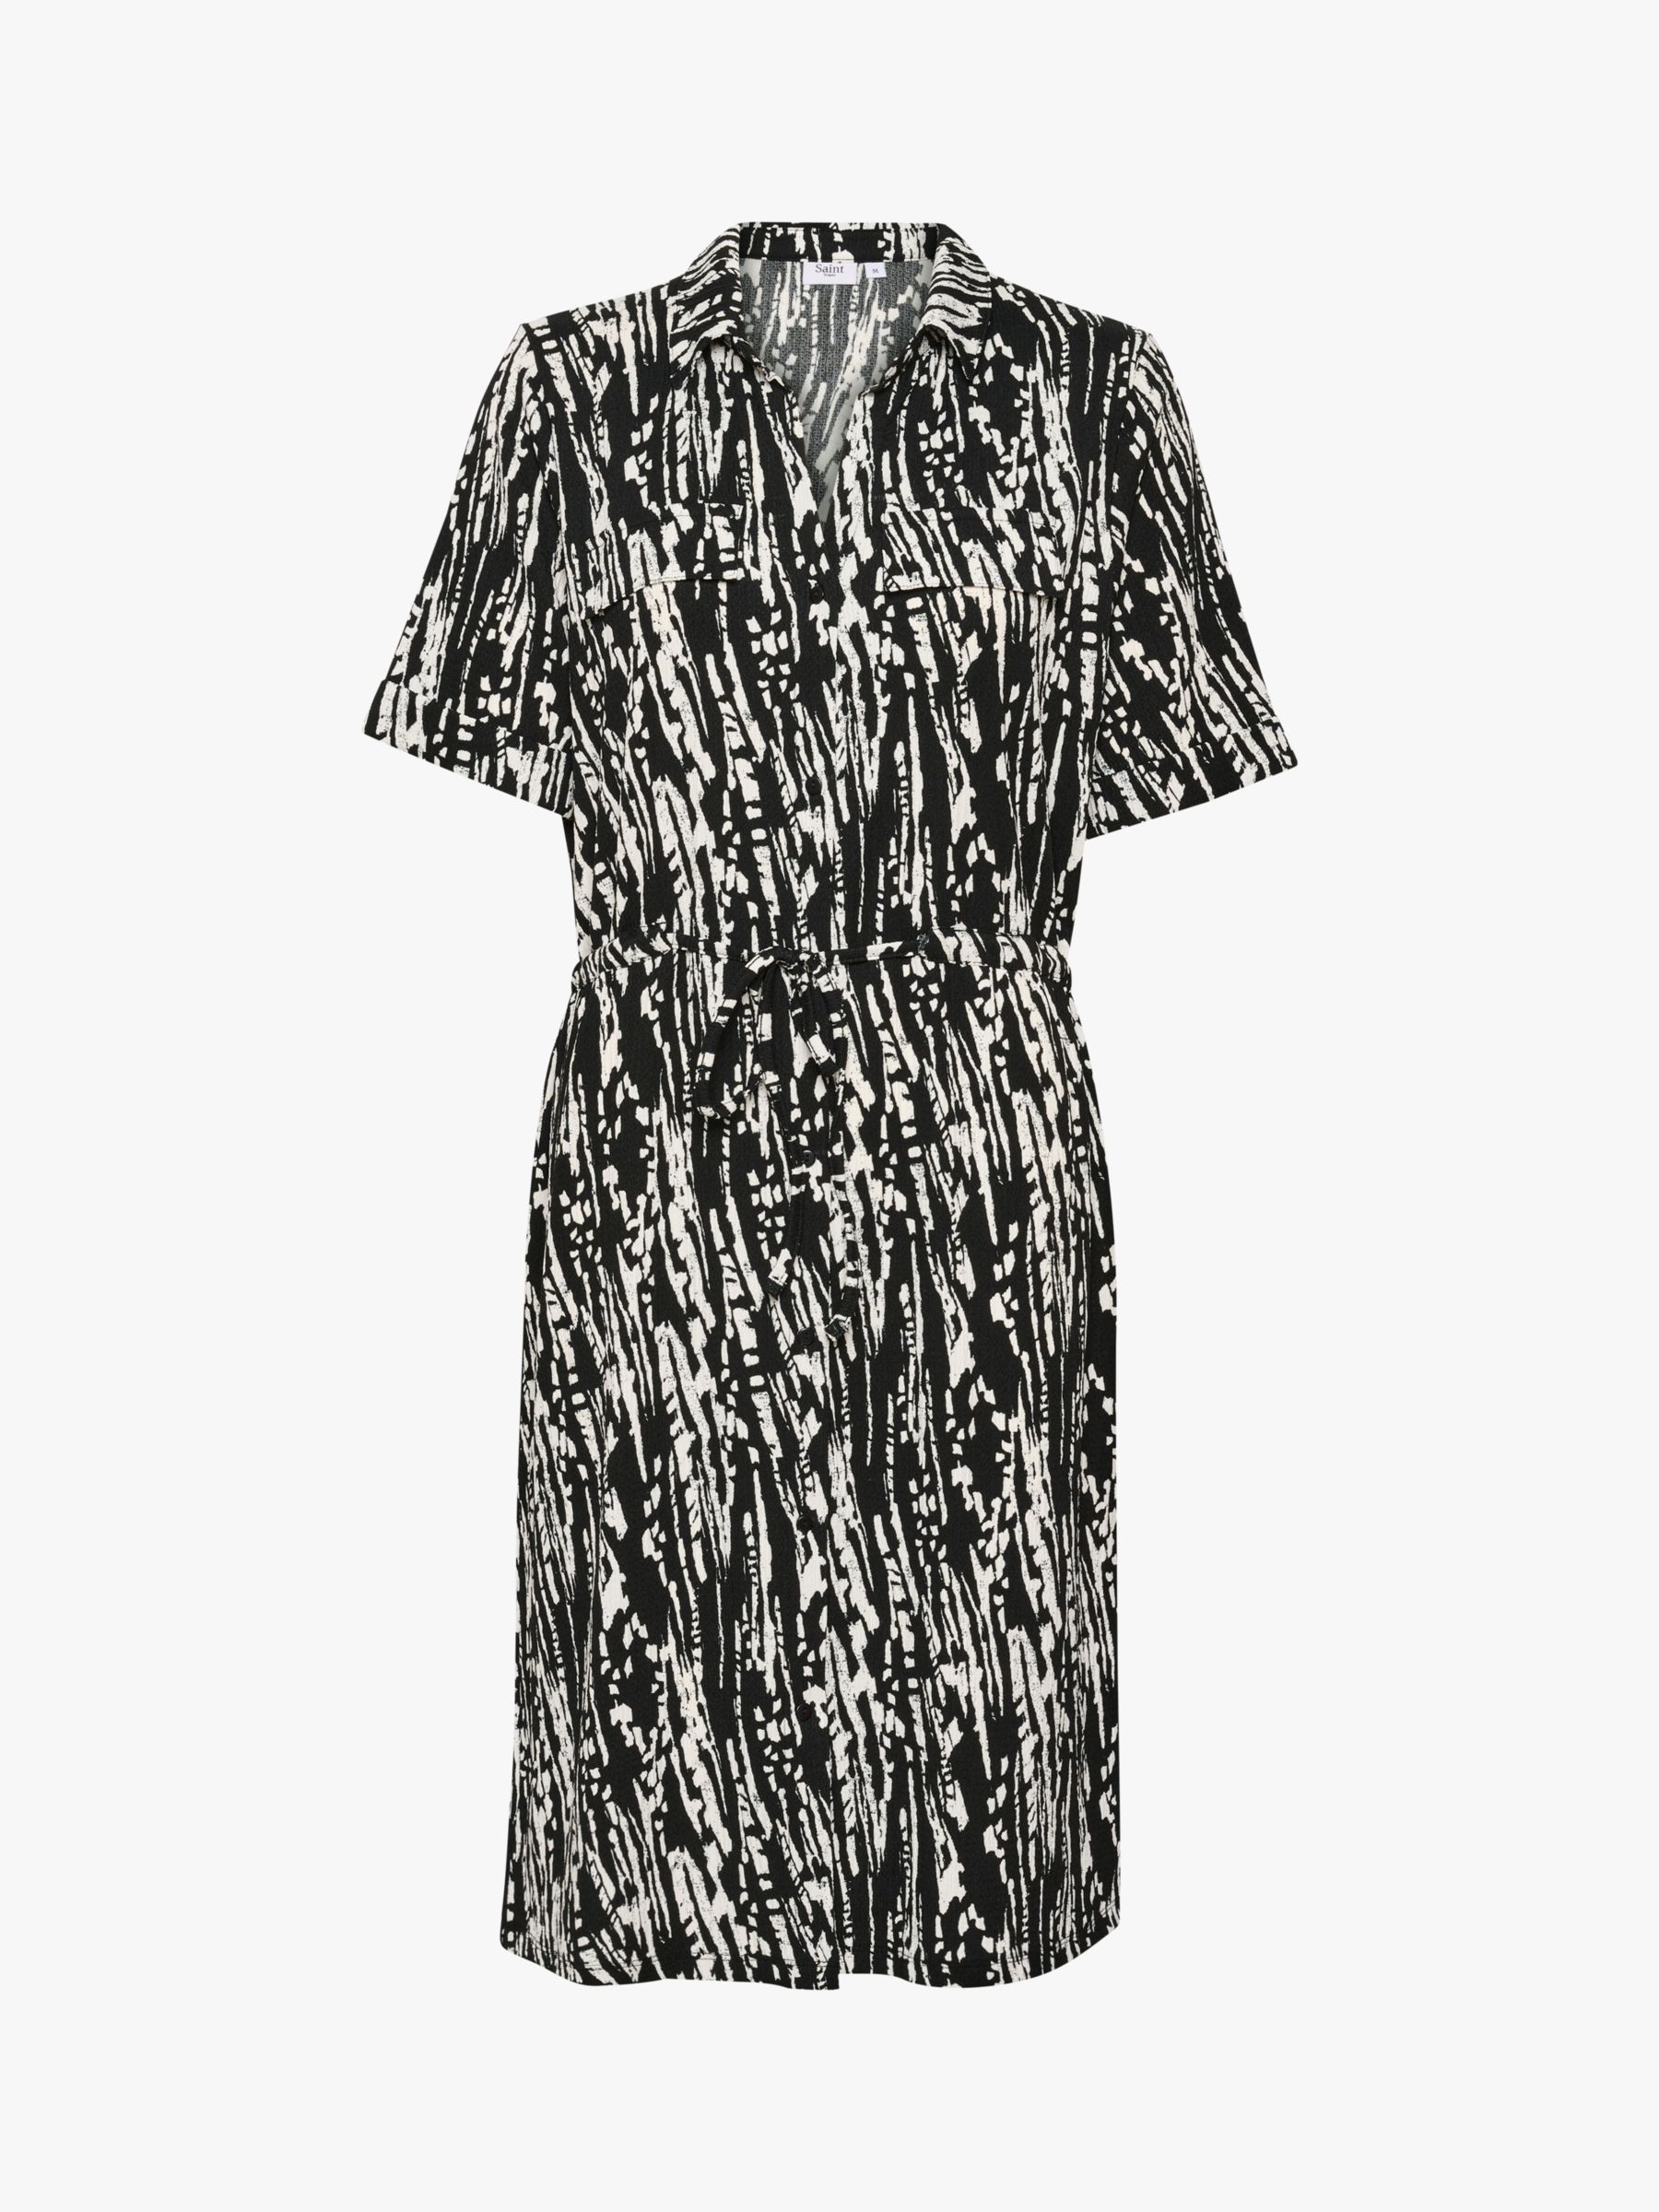 Saint Tropez Valda Bamboo Lines Shirt Dress, Black/White, XS